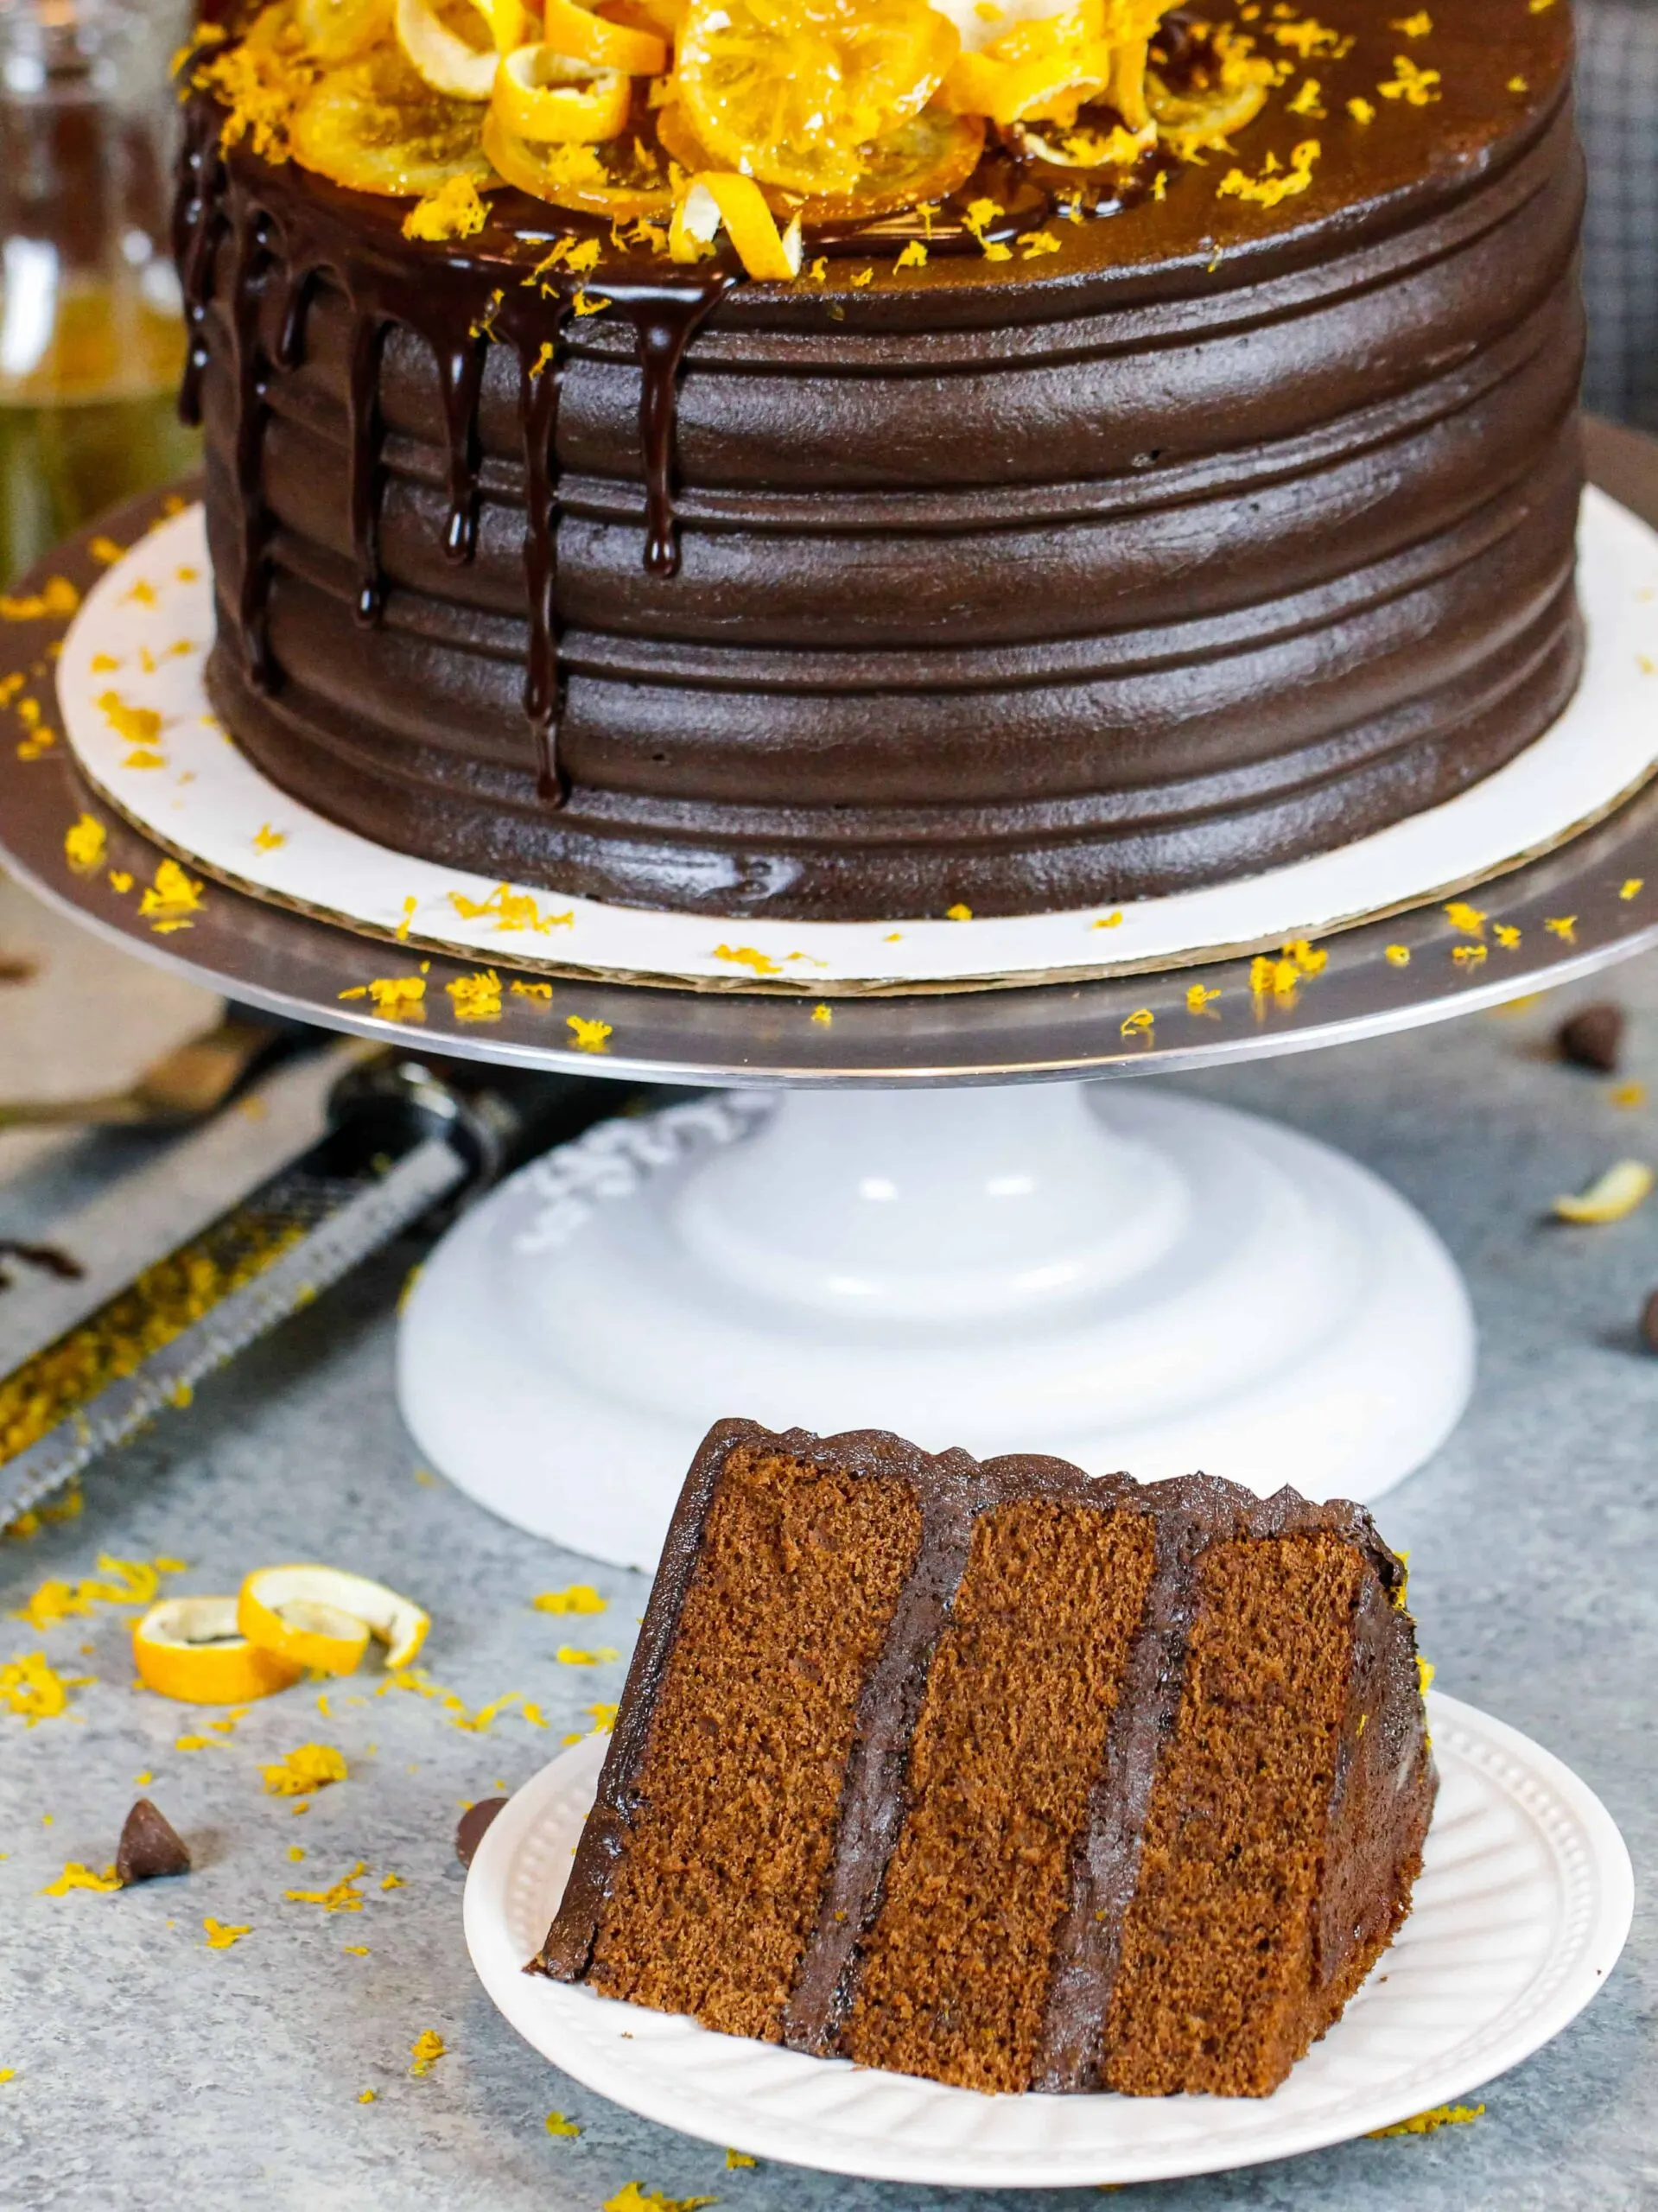 image of chocolate orange cake made with chocolate orange buttercream frosting